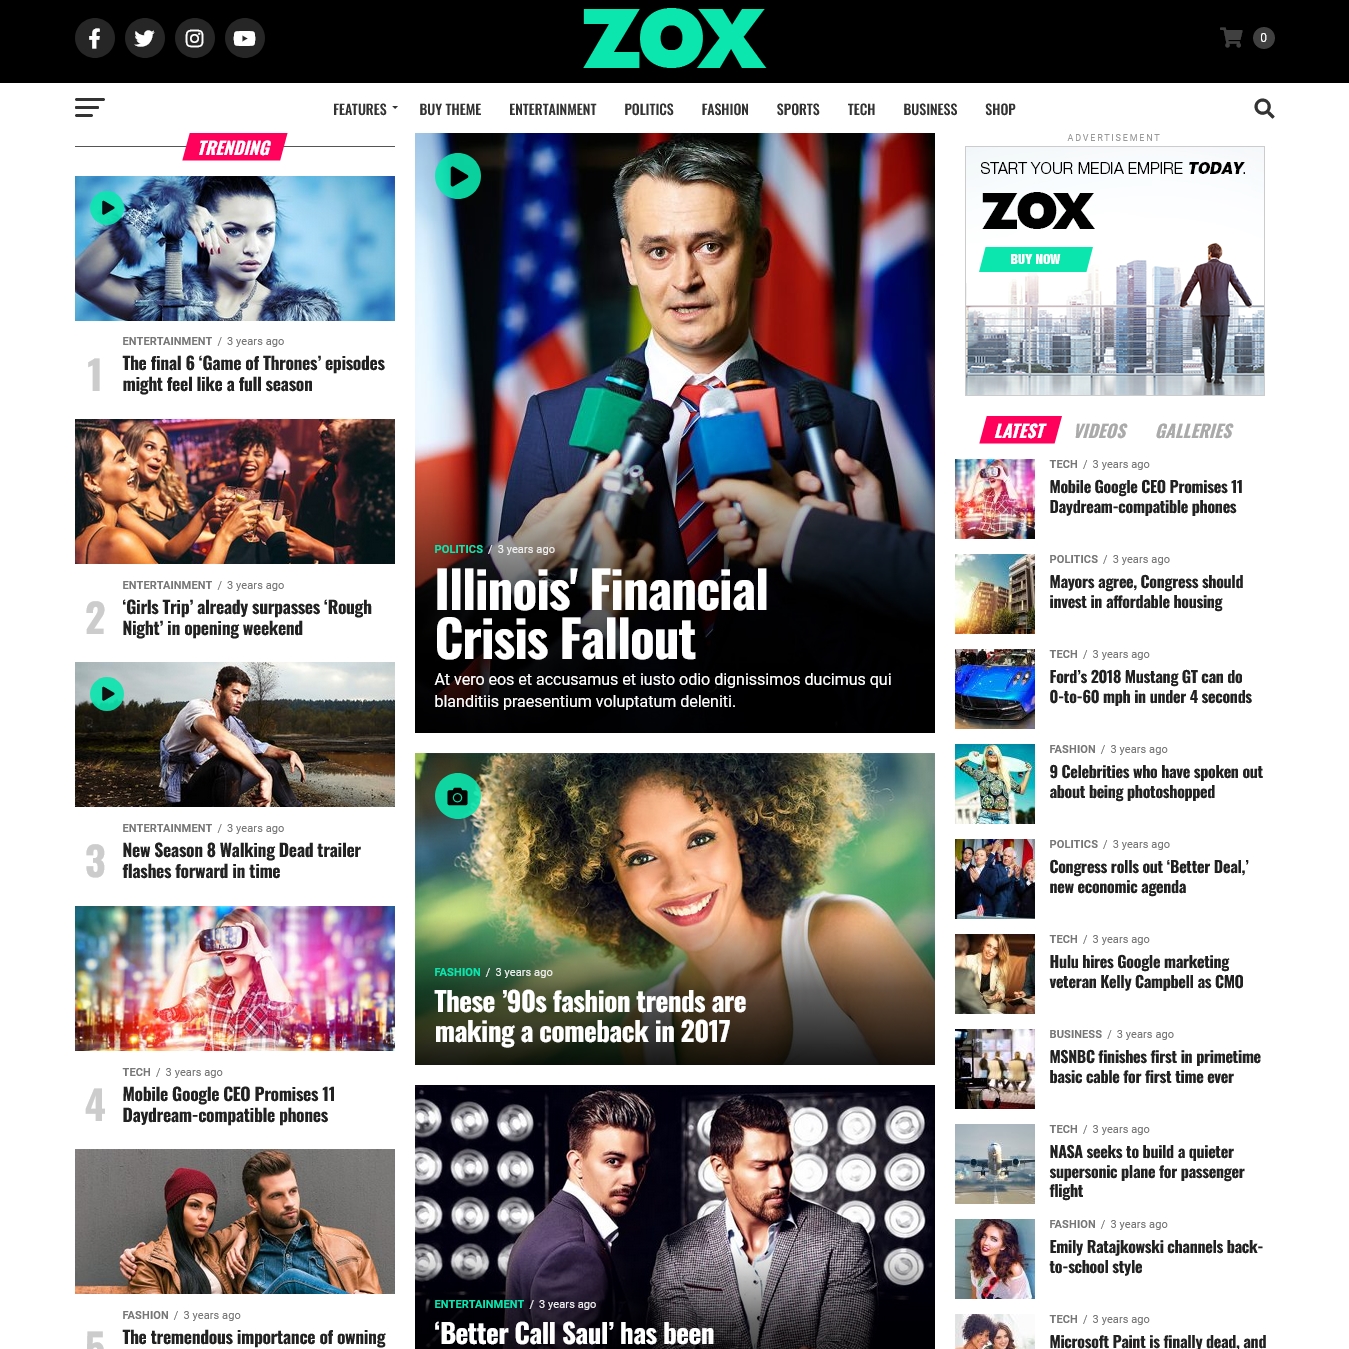 Zox News Professional WordPress News & Magazine Theme